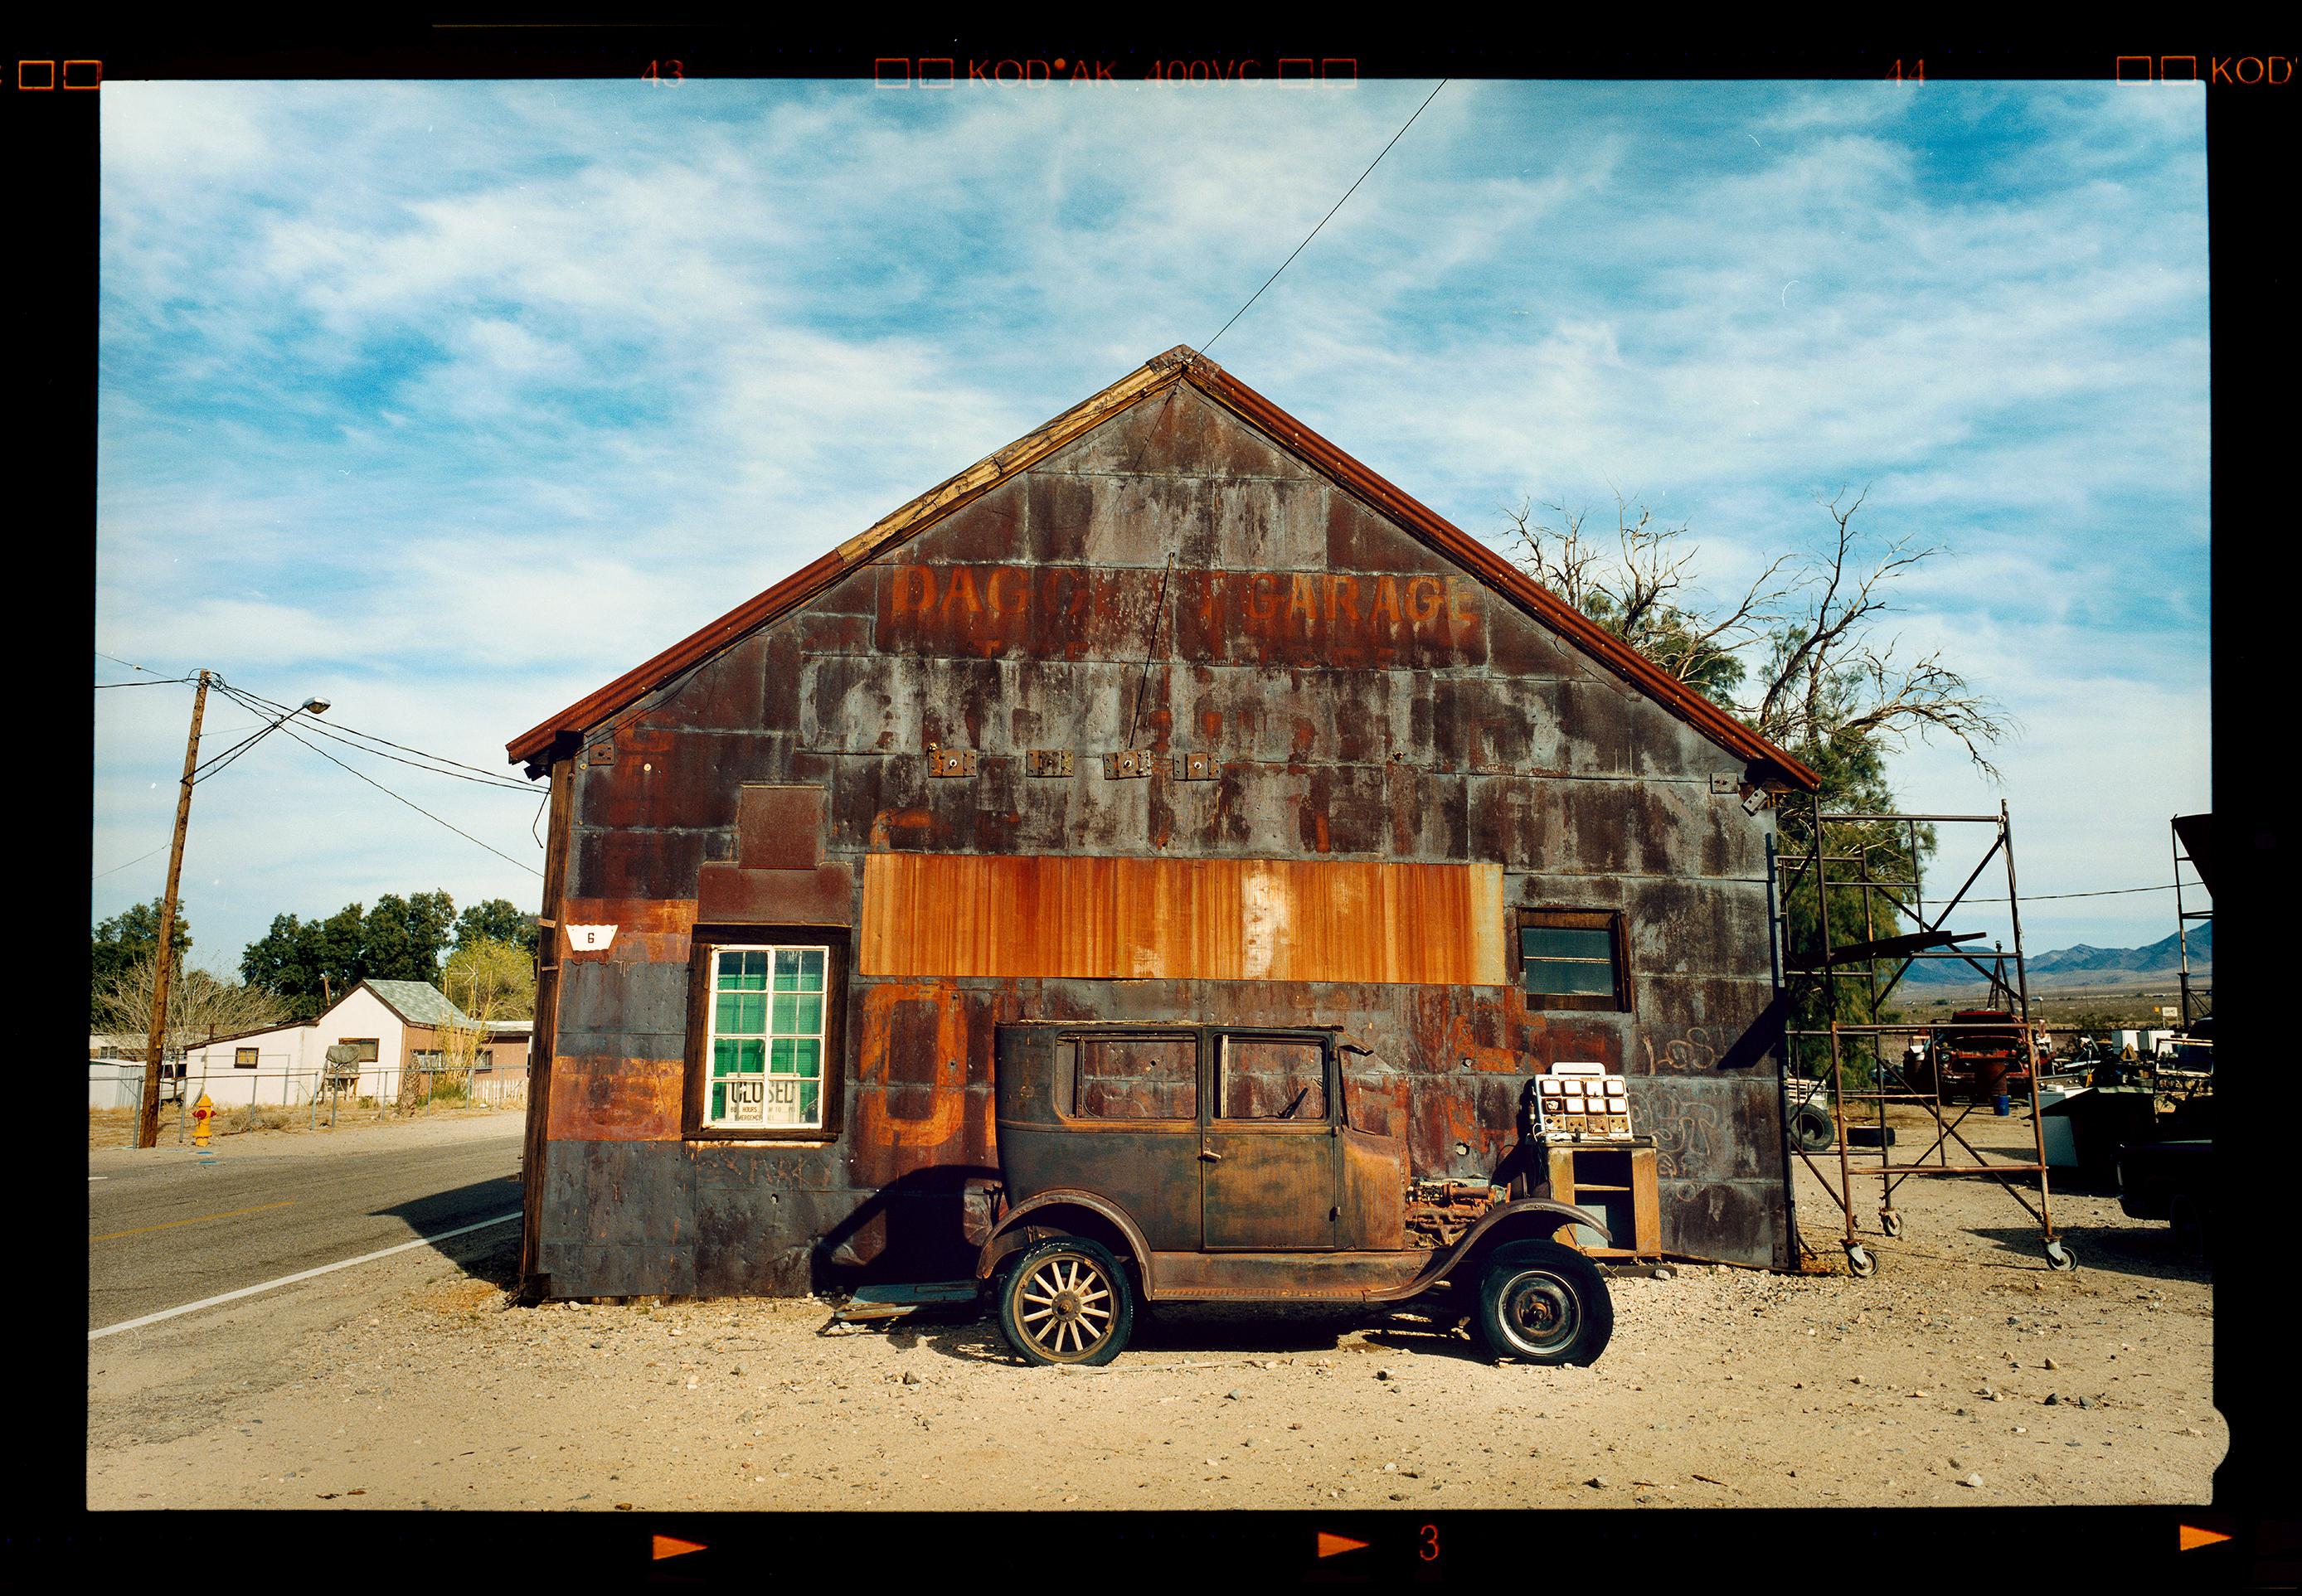 Richard Heeps Landscape Photograph - Model T and Garage, Daggett, California - Color Photography